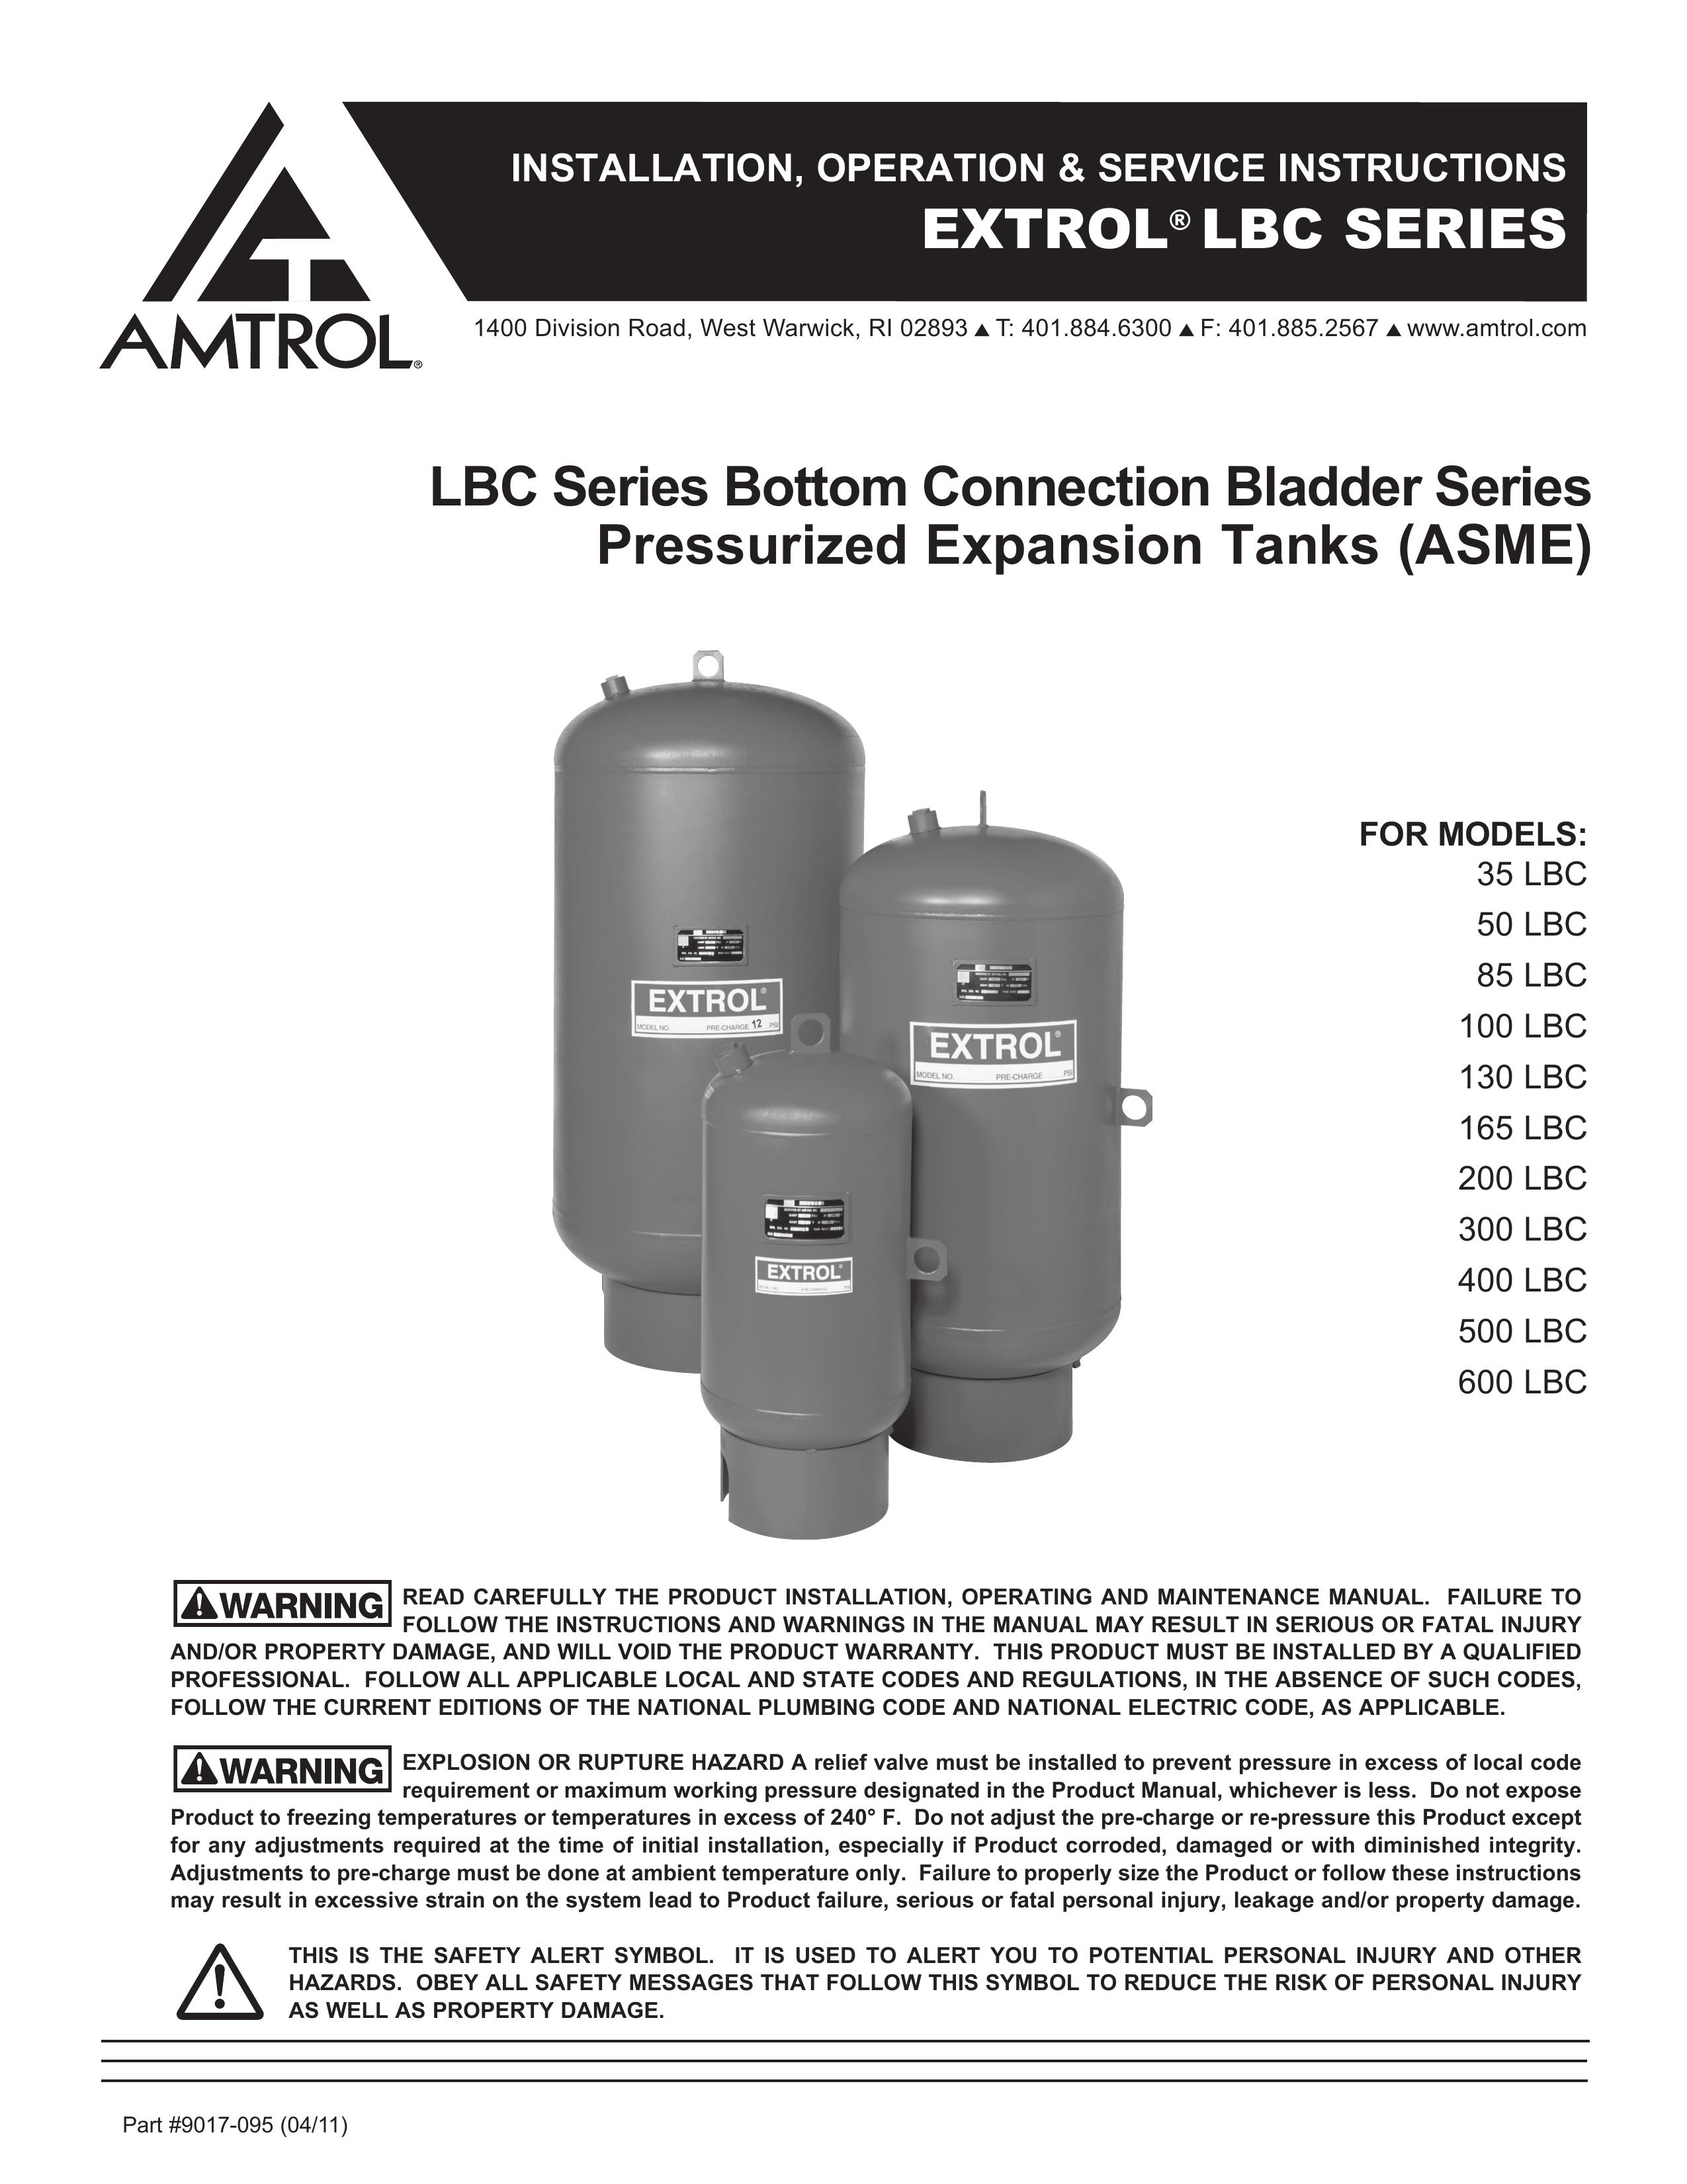 Amtrol 400 LBC Oxygen Equipment User Manual